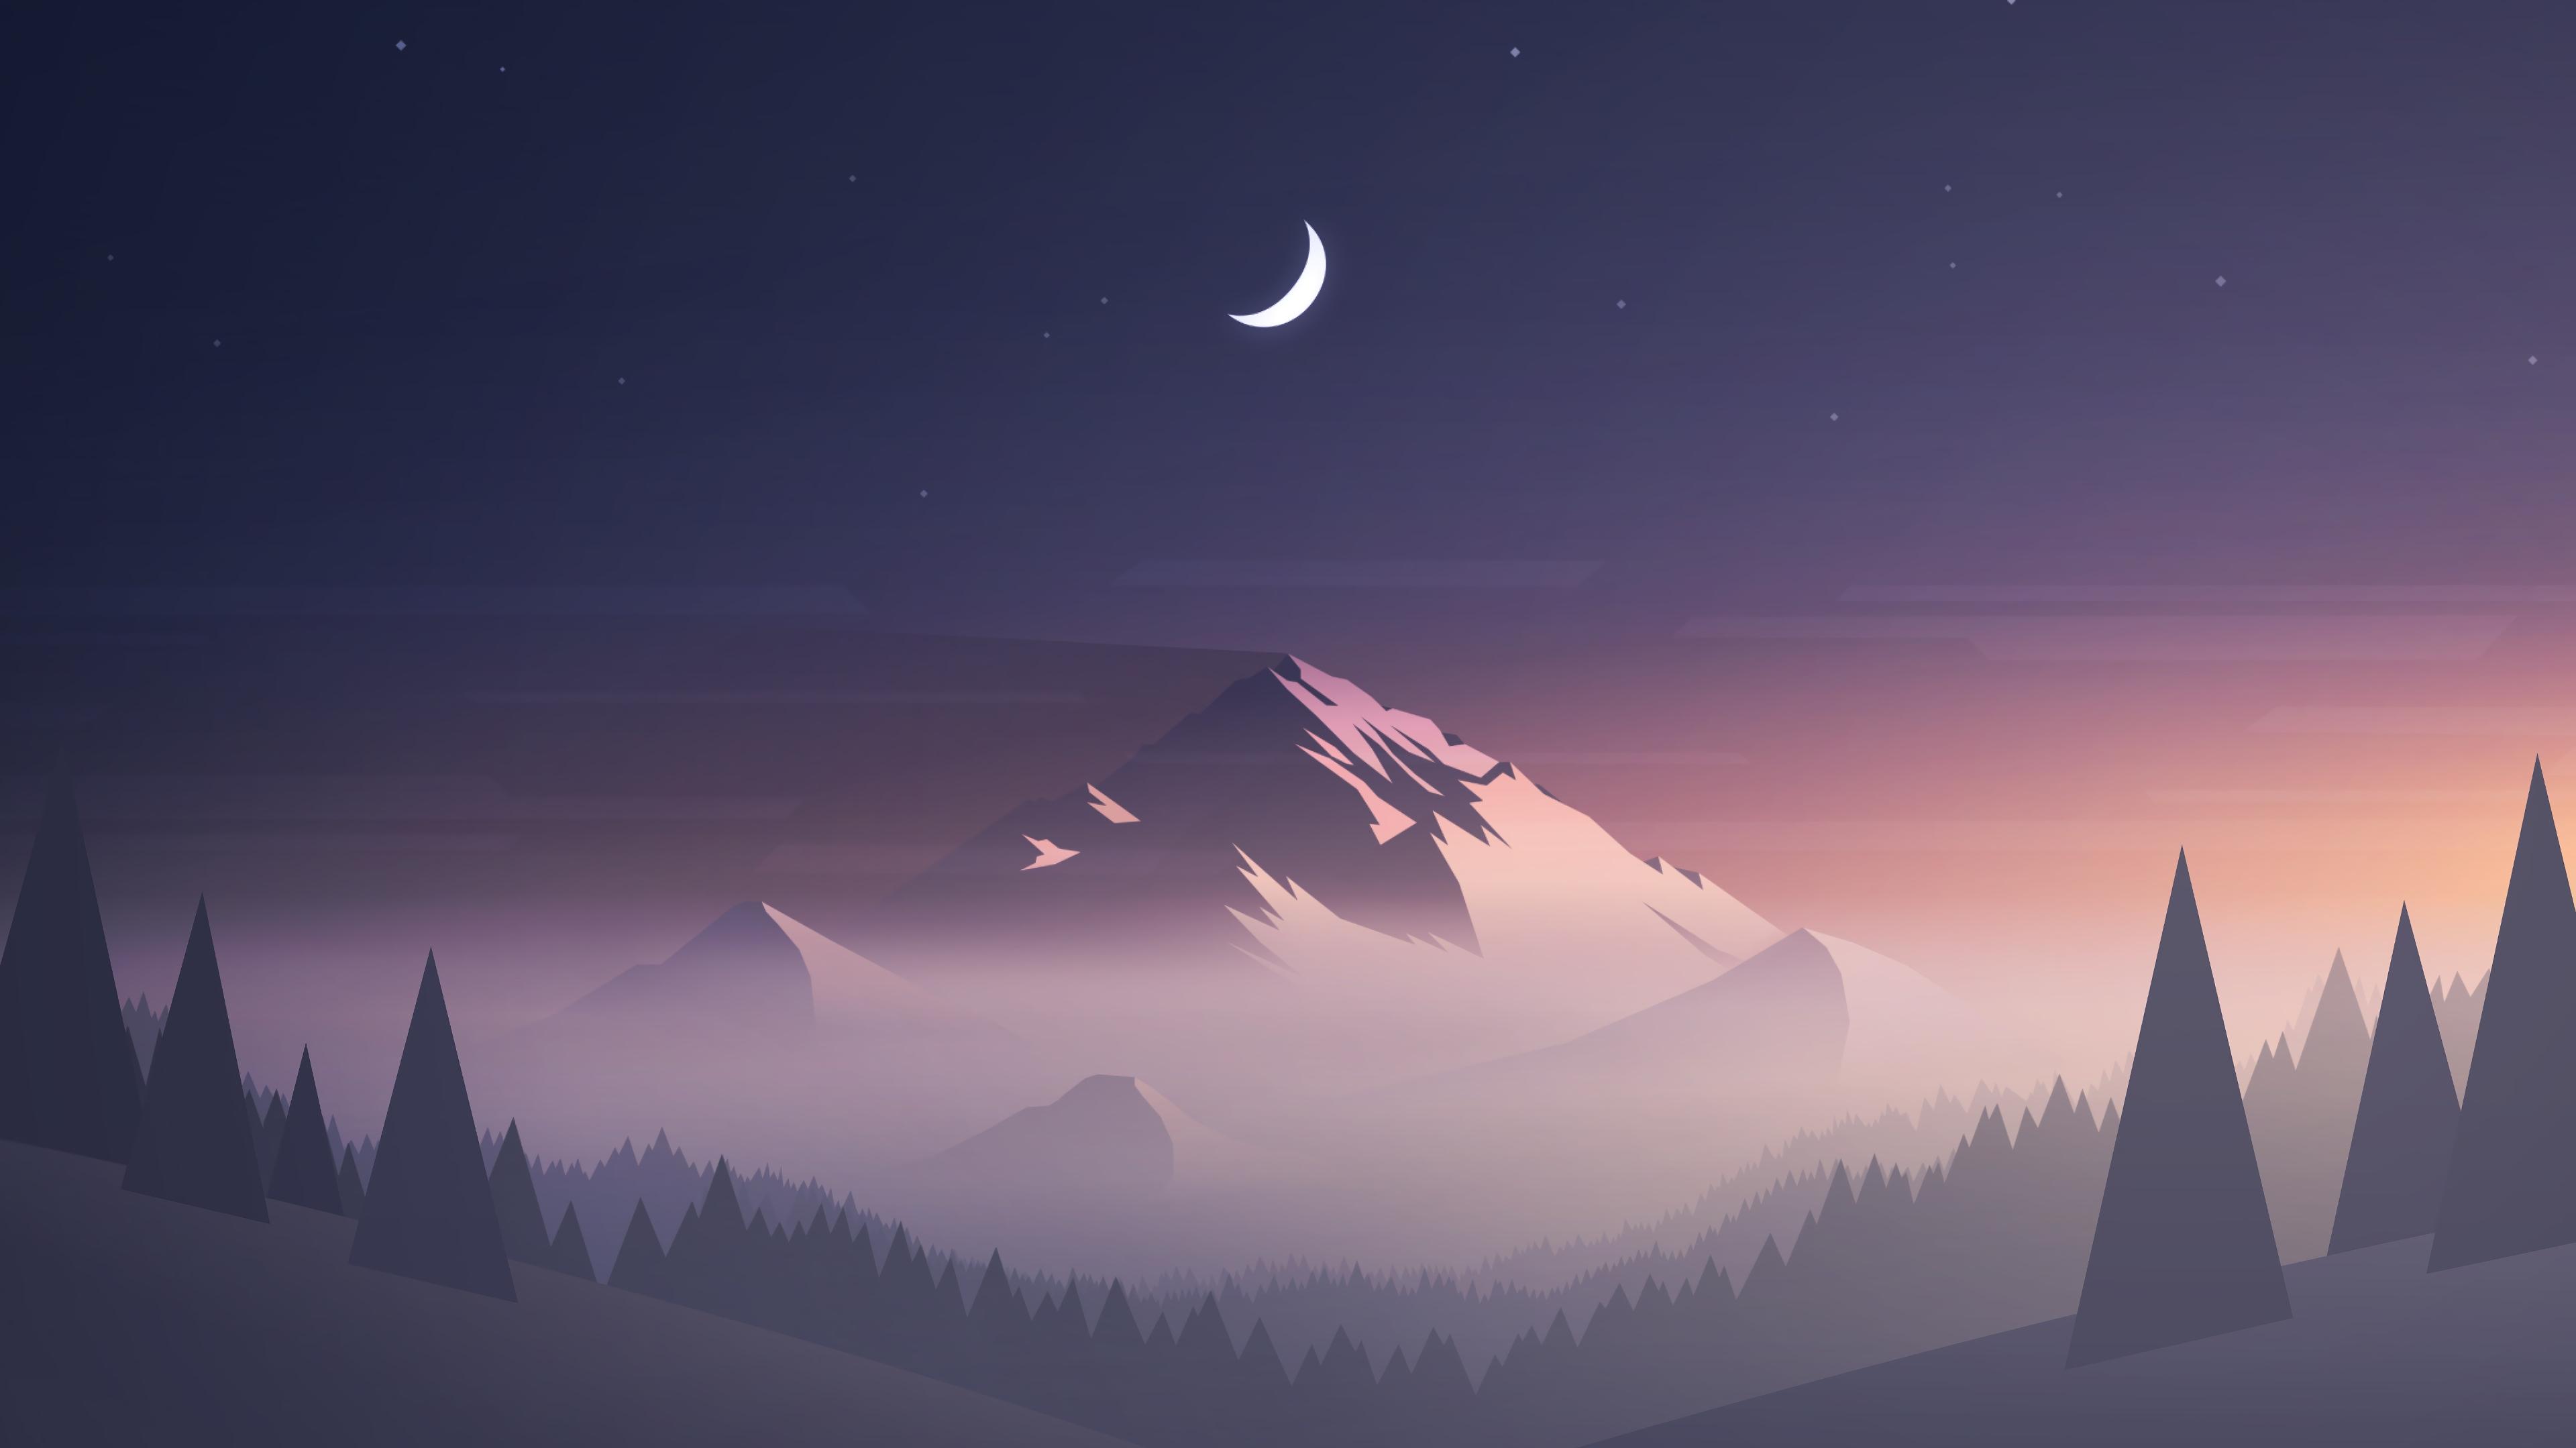 Minimalist Digital Art Mountain Landscape Night Moon 4k Wallpaper